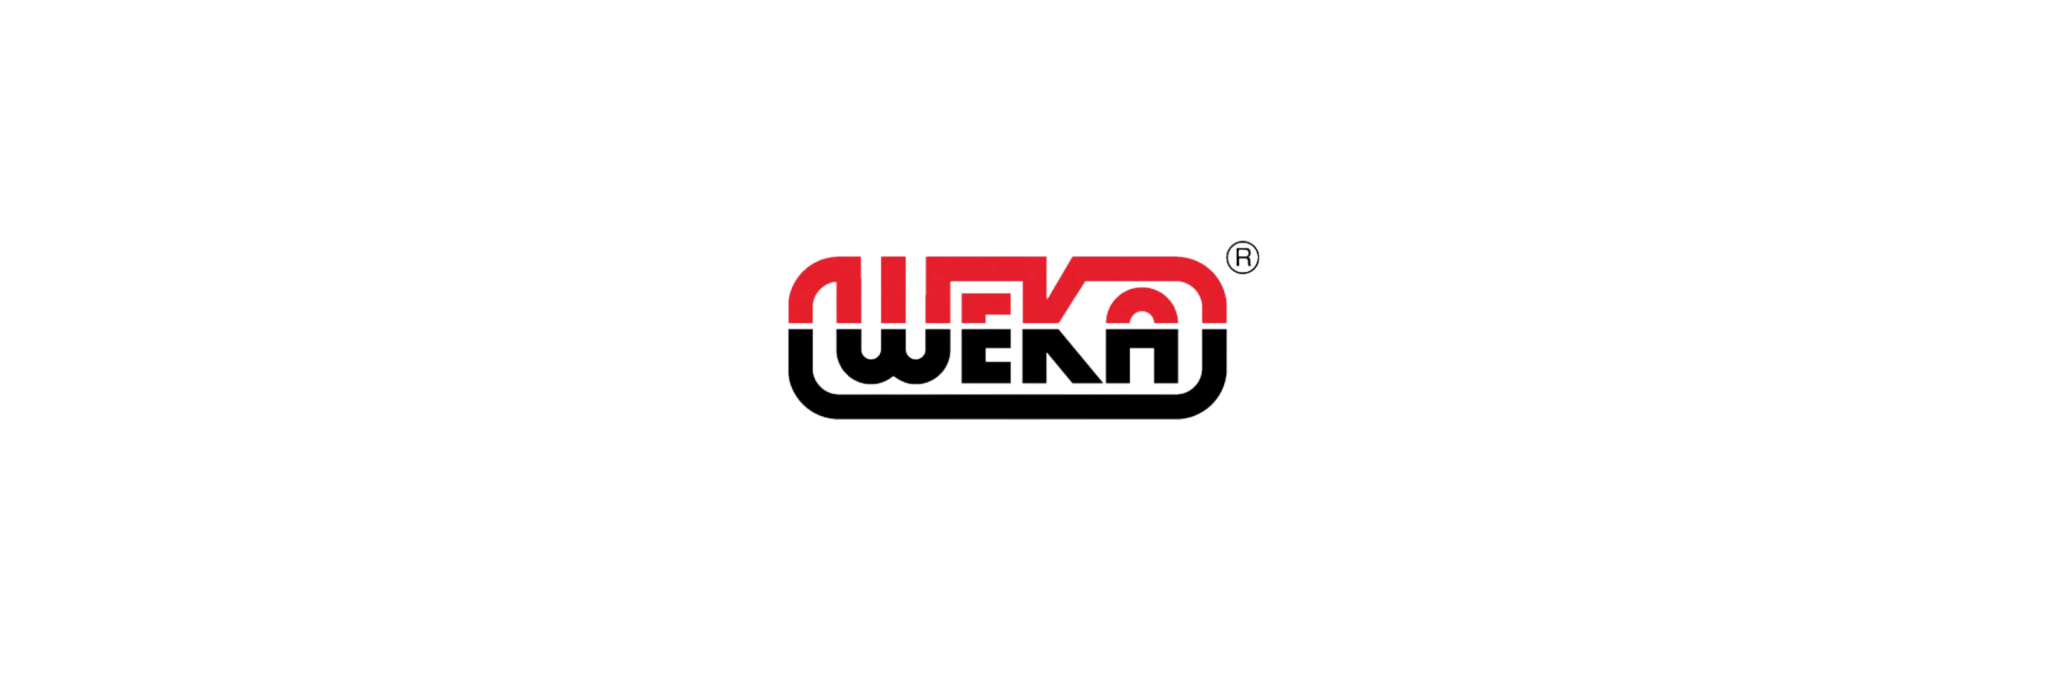 WEKA - Klenk Maschinenhandel